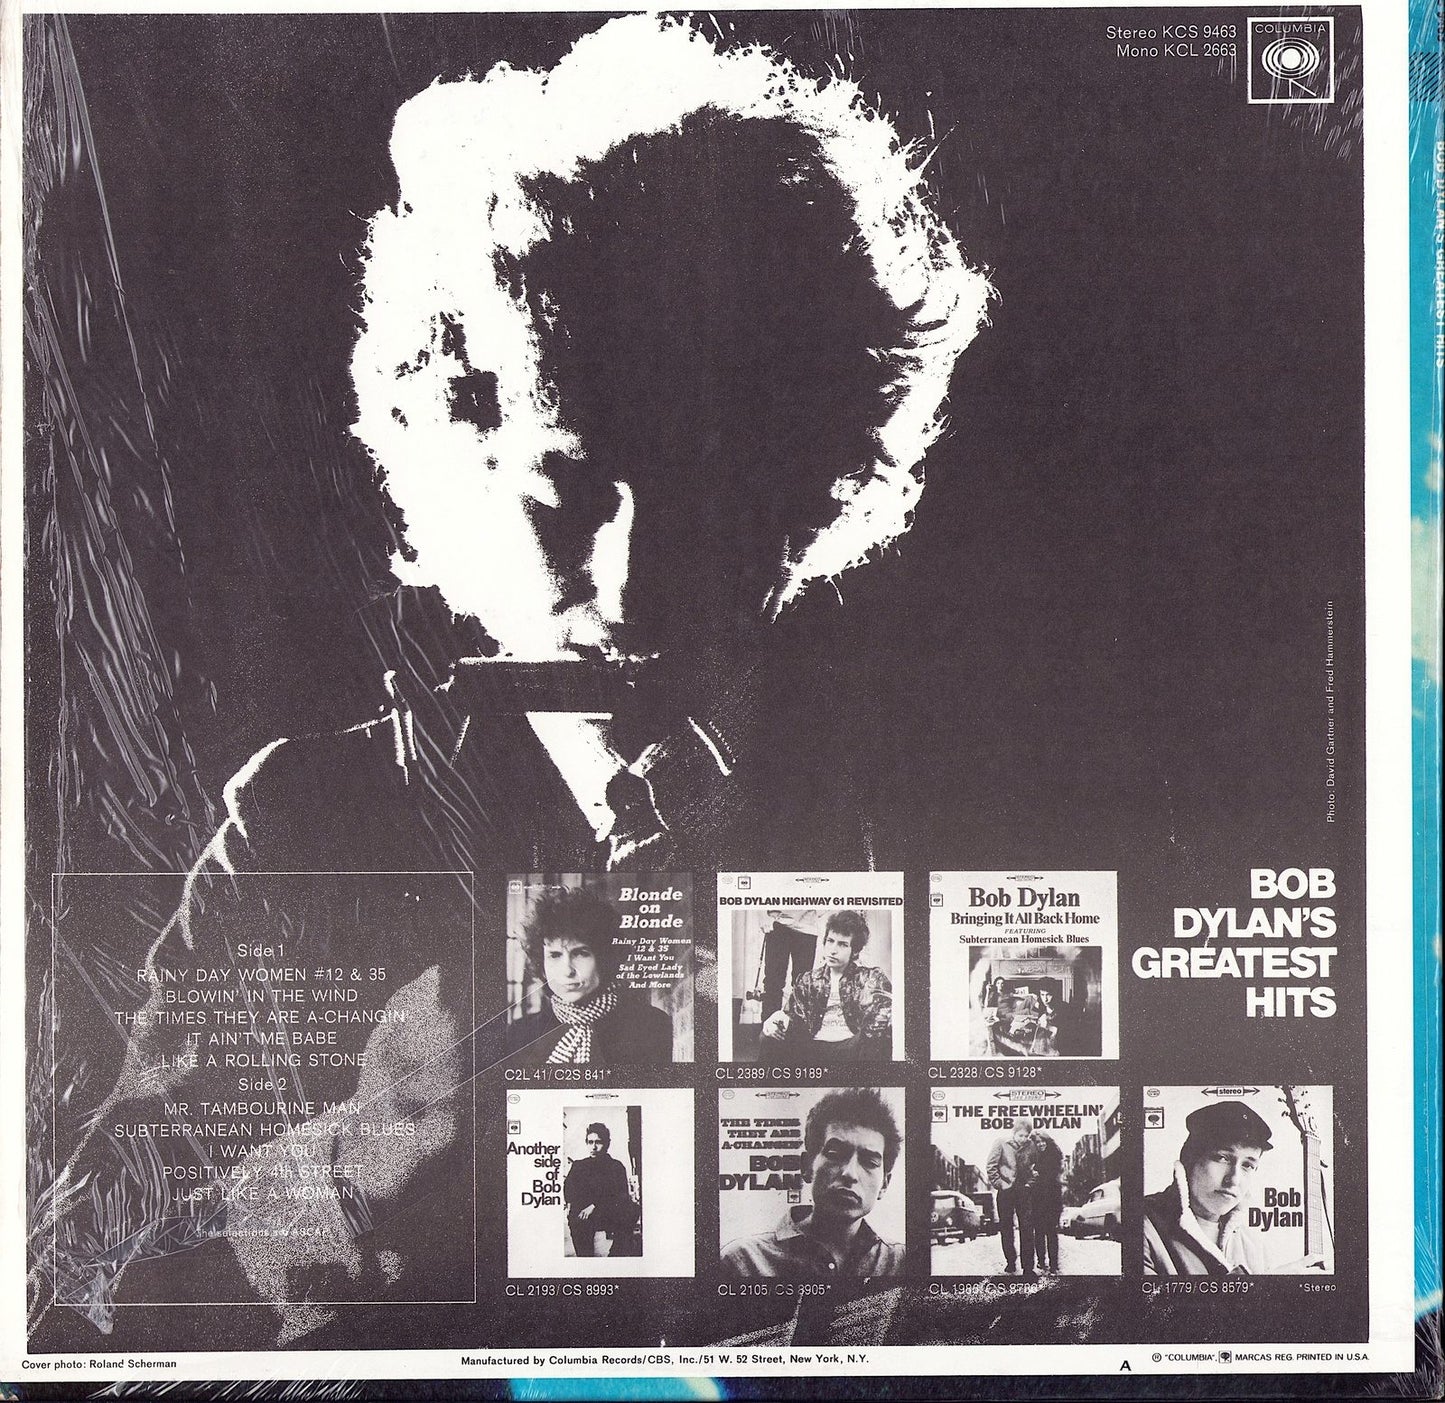 Bob Dylan - Bob Dylan's Greatest Hits Vinyl LP US